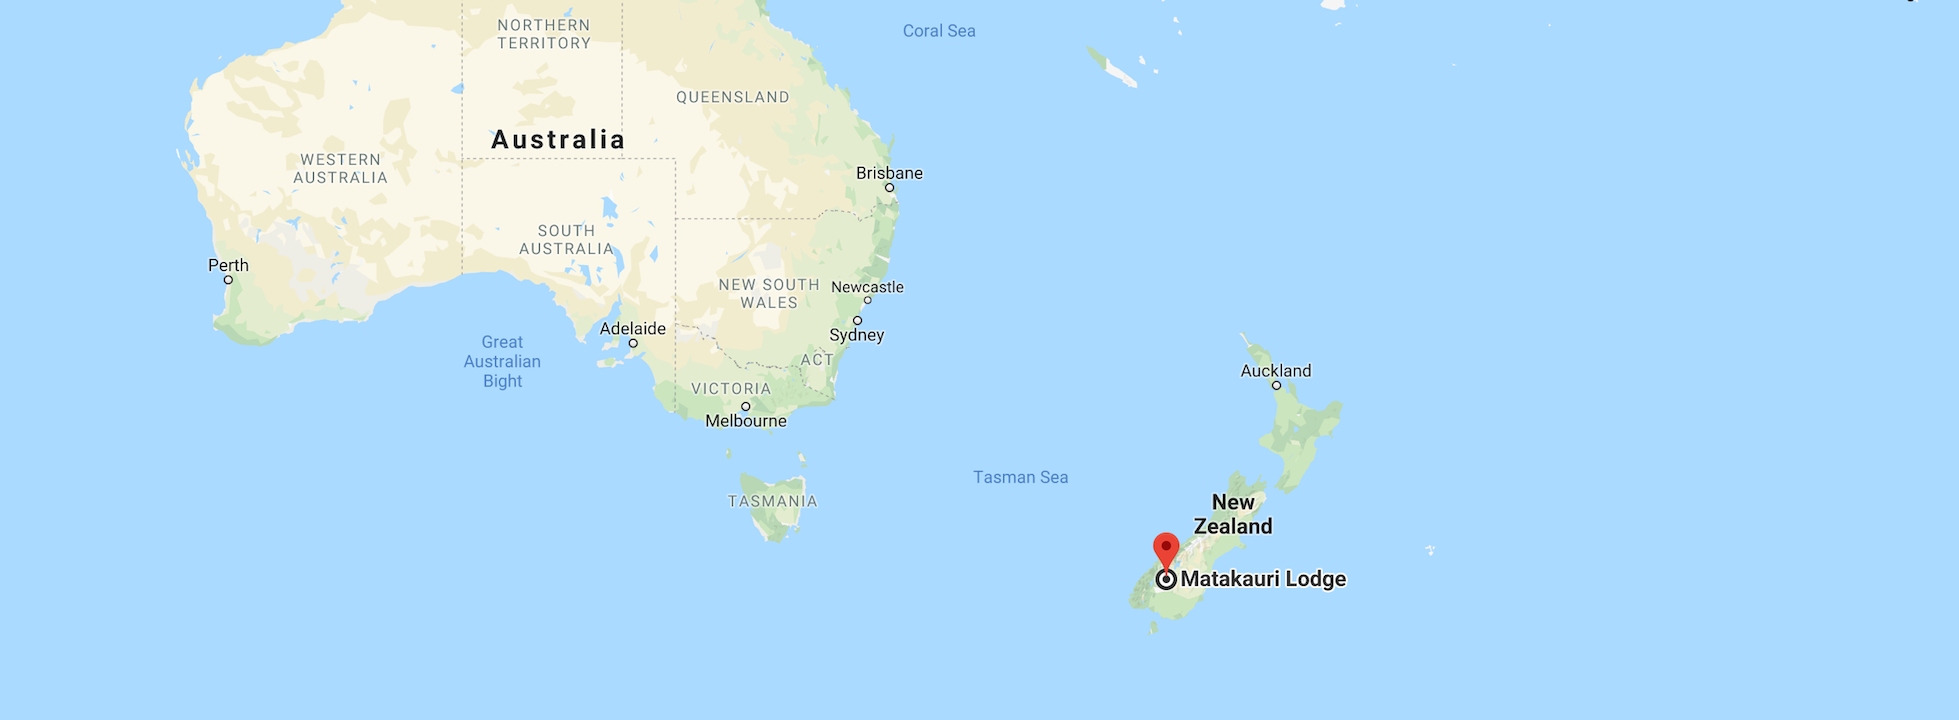 Robertson luxurious Lodges Matakauri Lodge , Queenstown / New Zealand